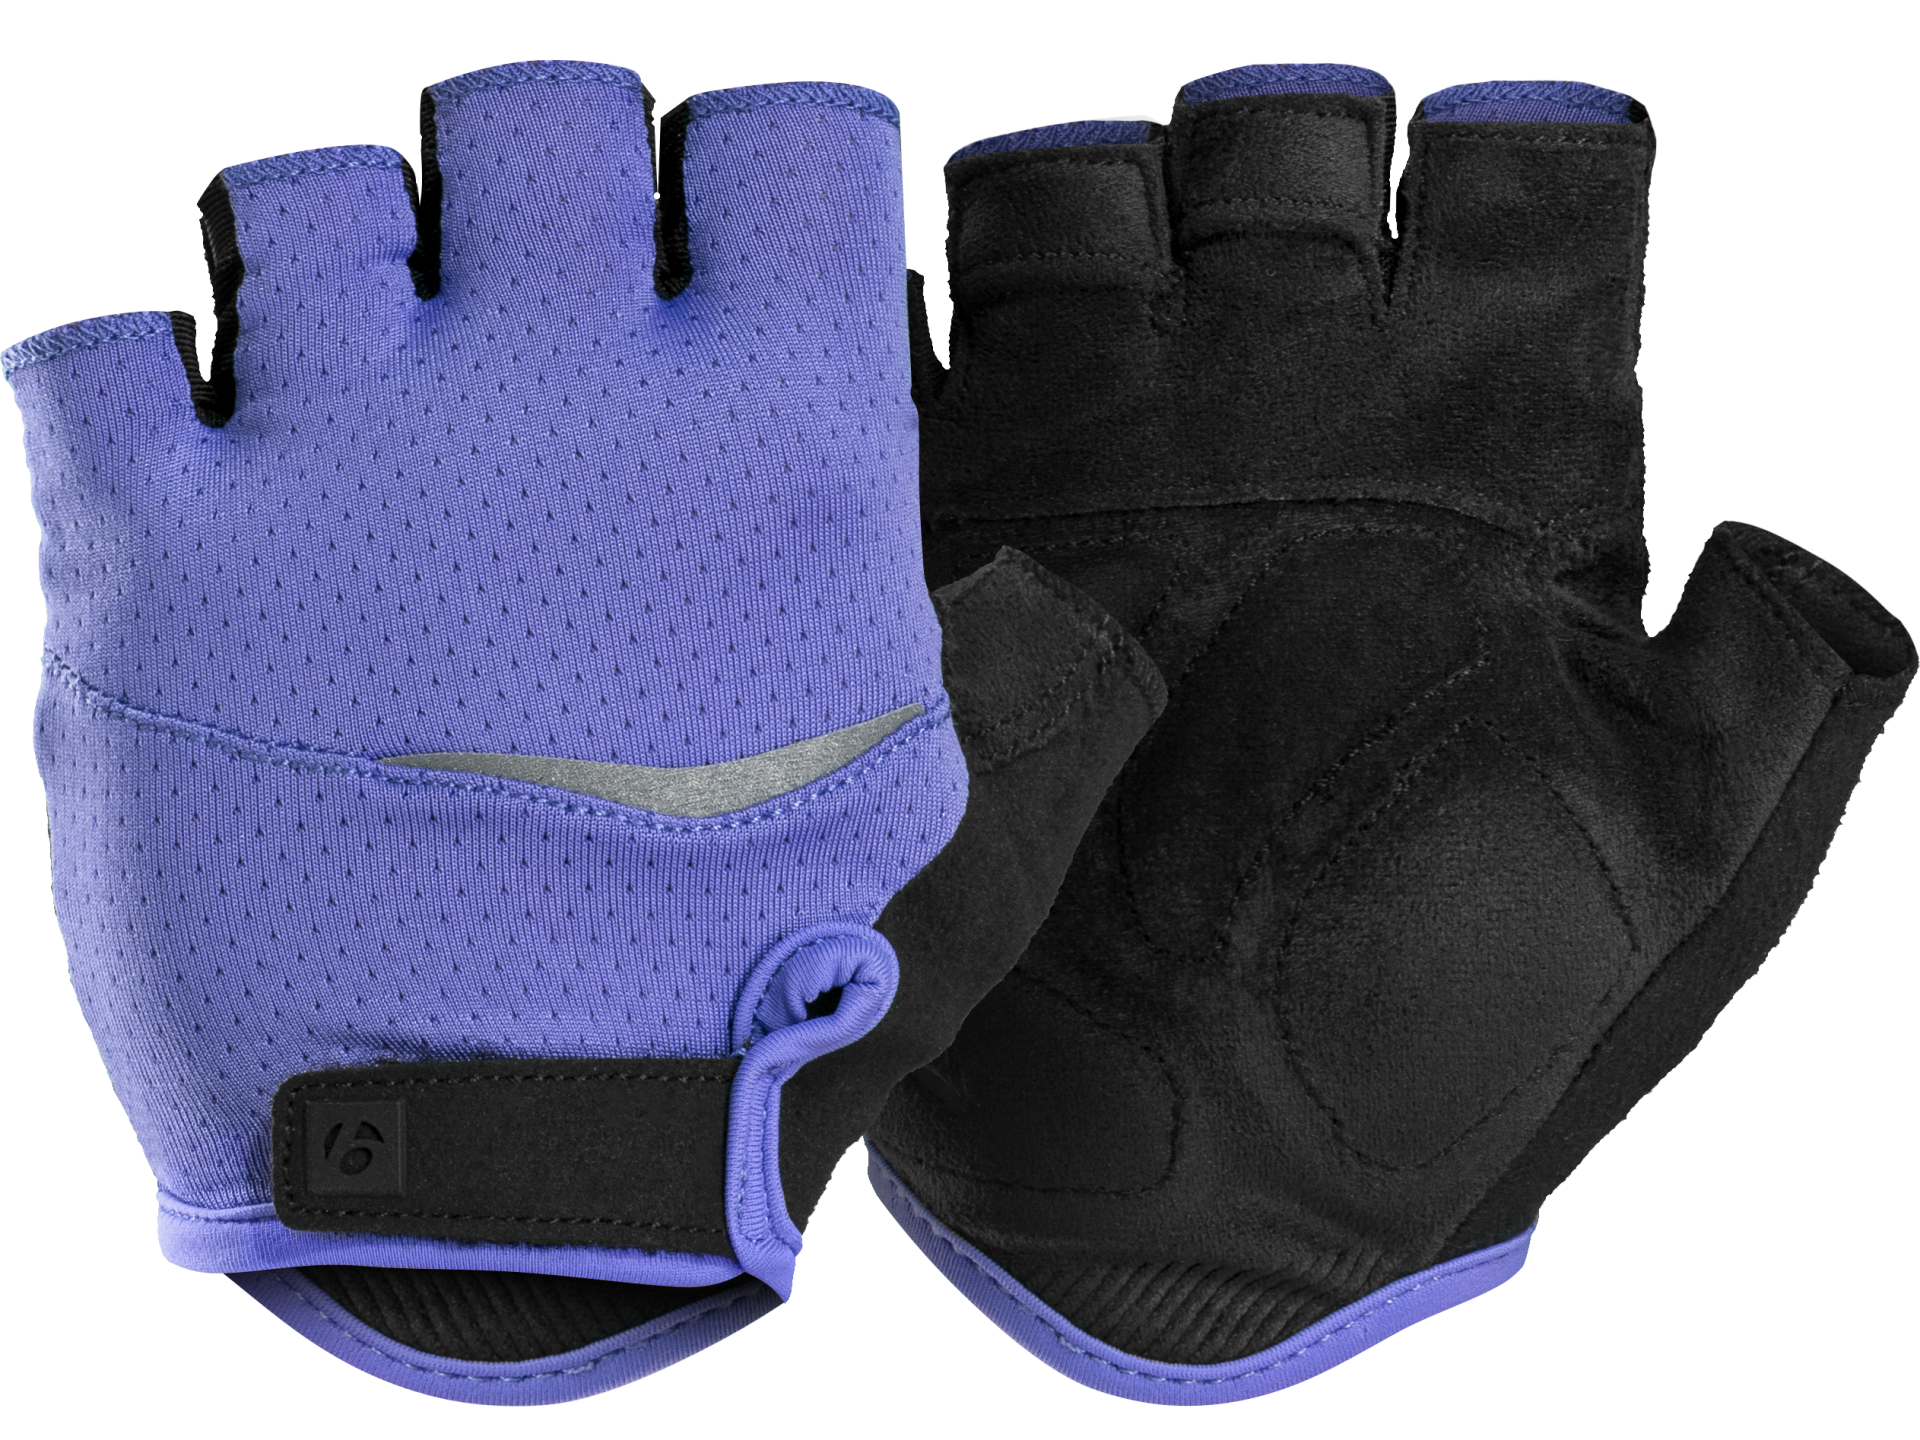 Anara Women's Cycling Glove,